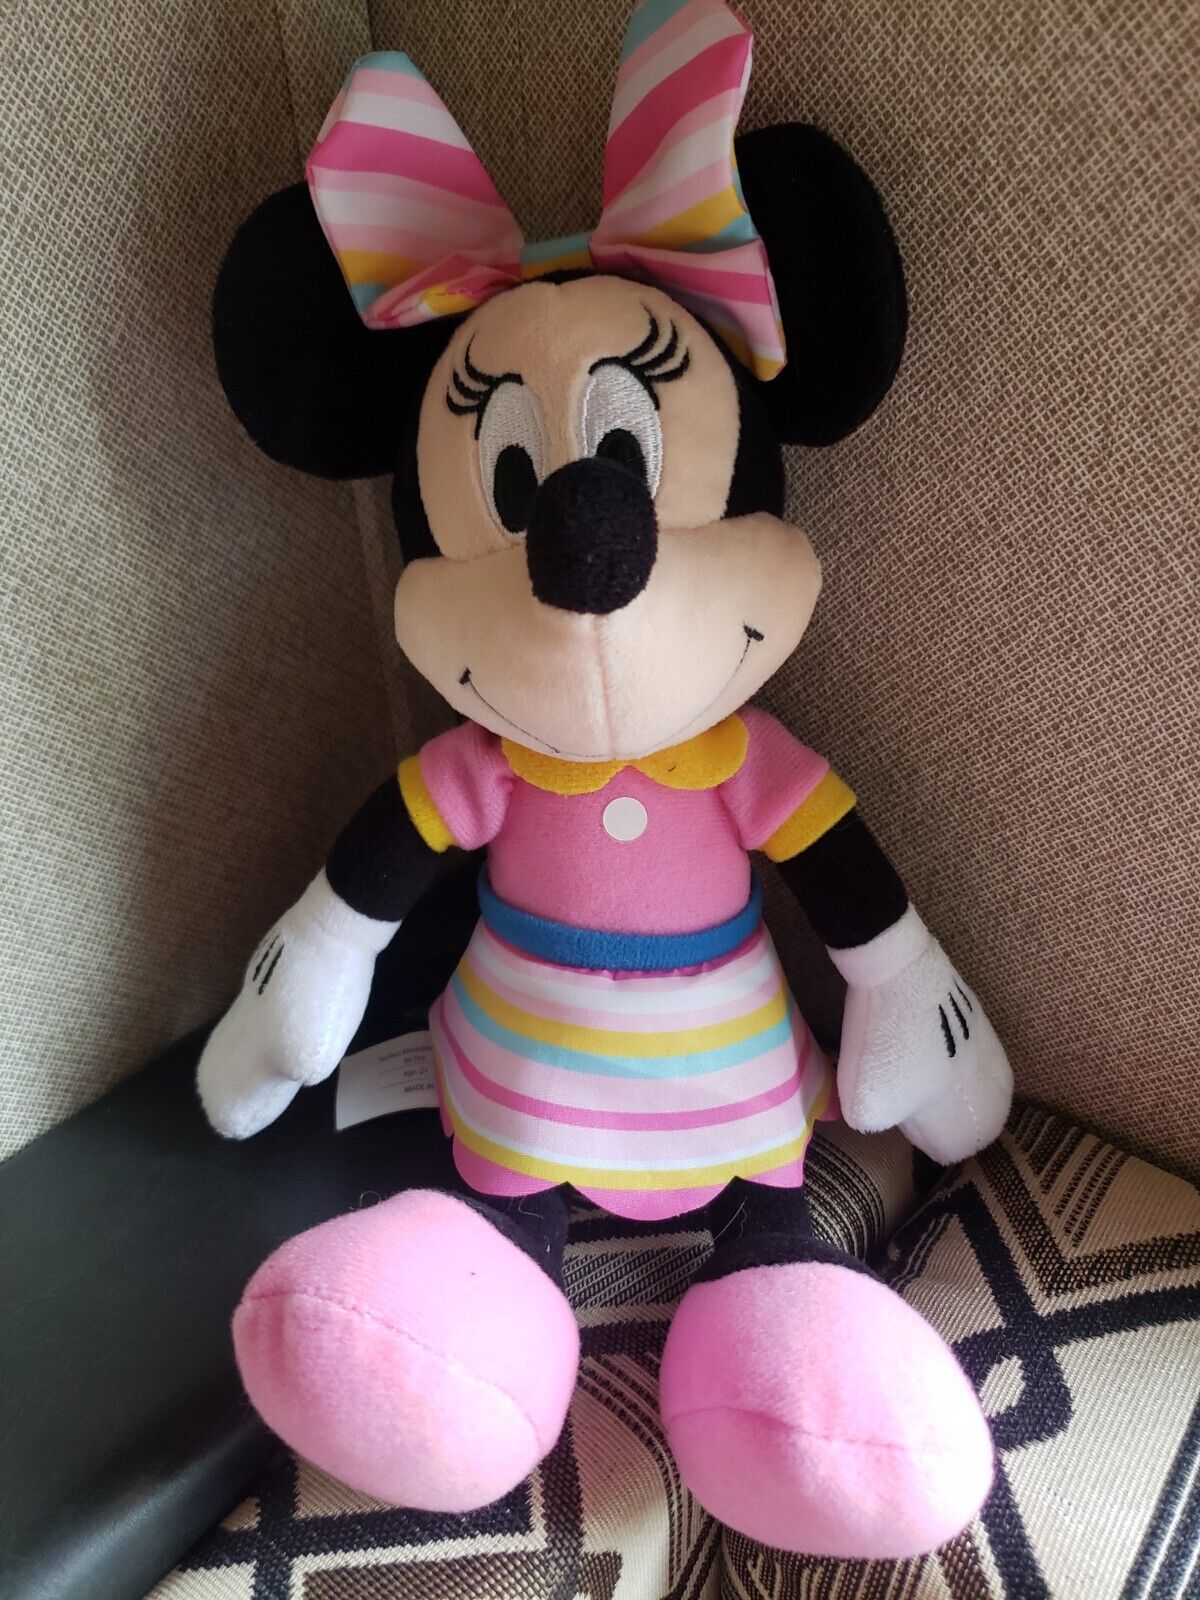 Mini Mouse Disney Plush Stuffed Doll Toy 10,5 in New